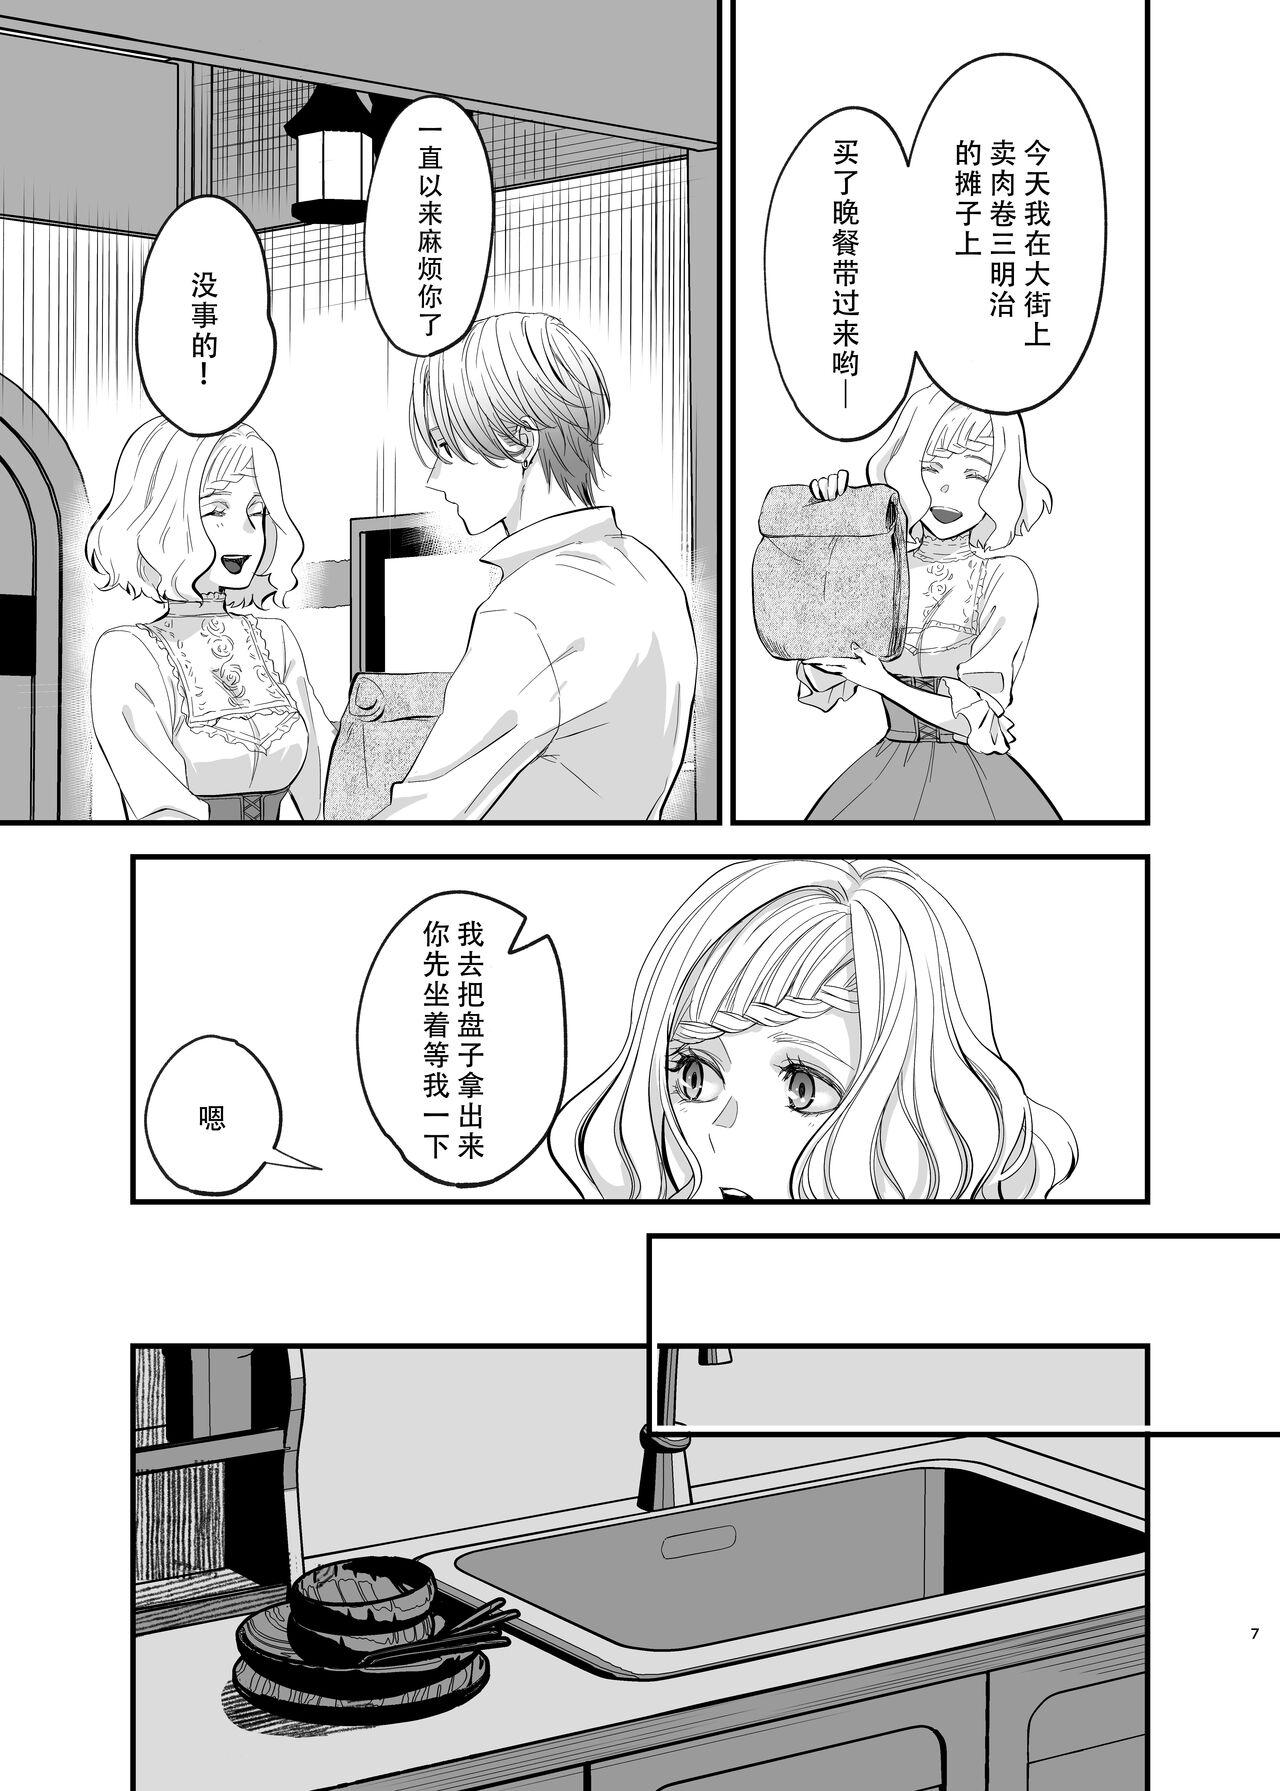 Morrita oyasumiitoshiihito | 晚安 我心爱的人 - Original Lingerie - Page 7